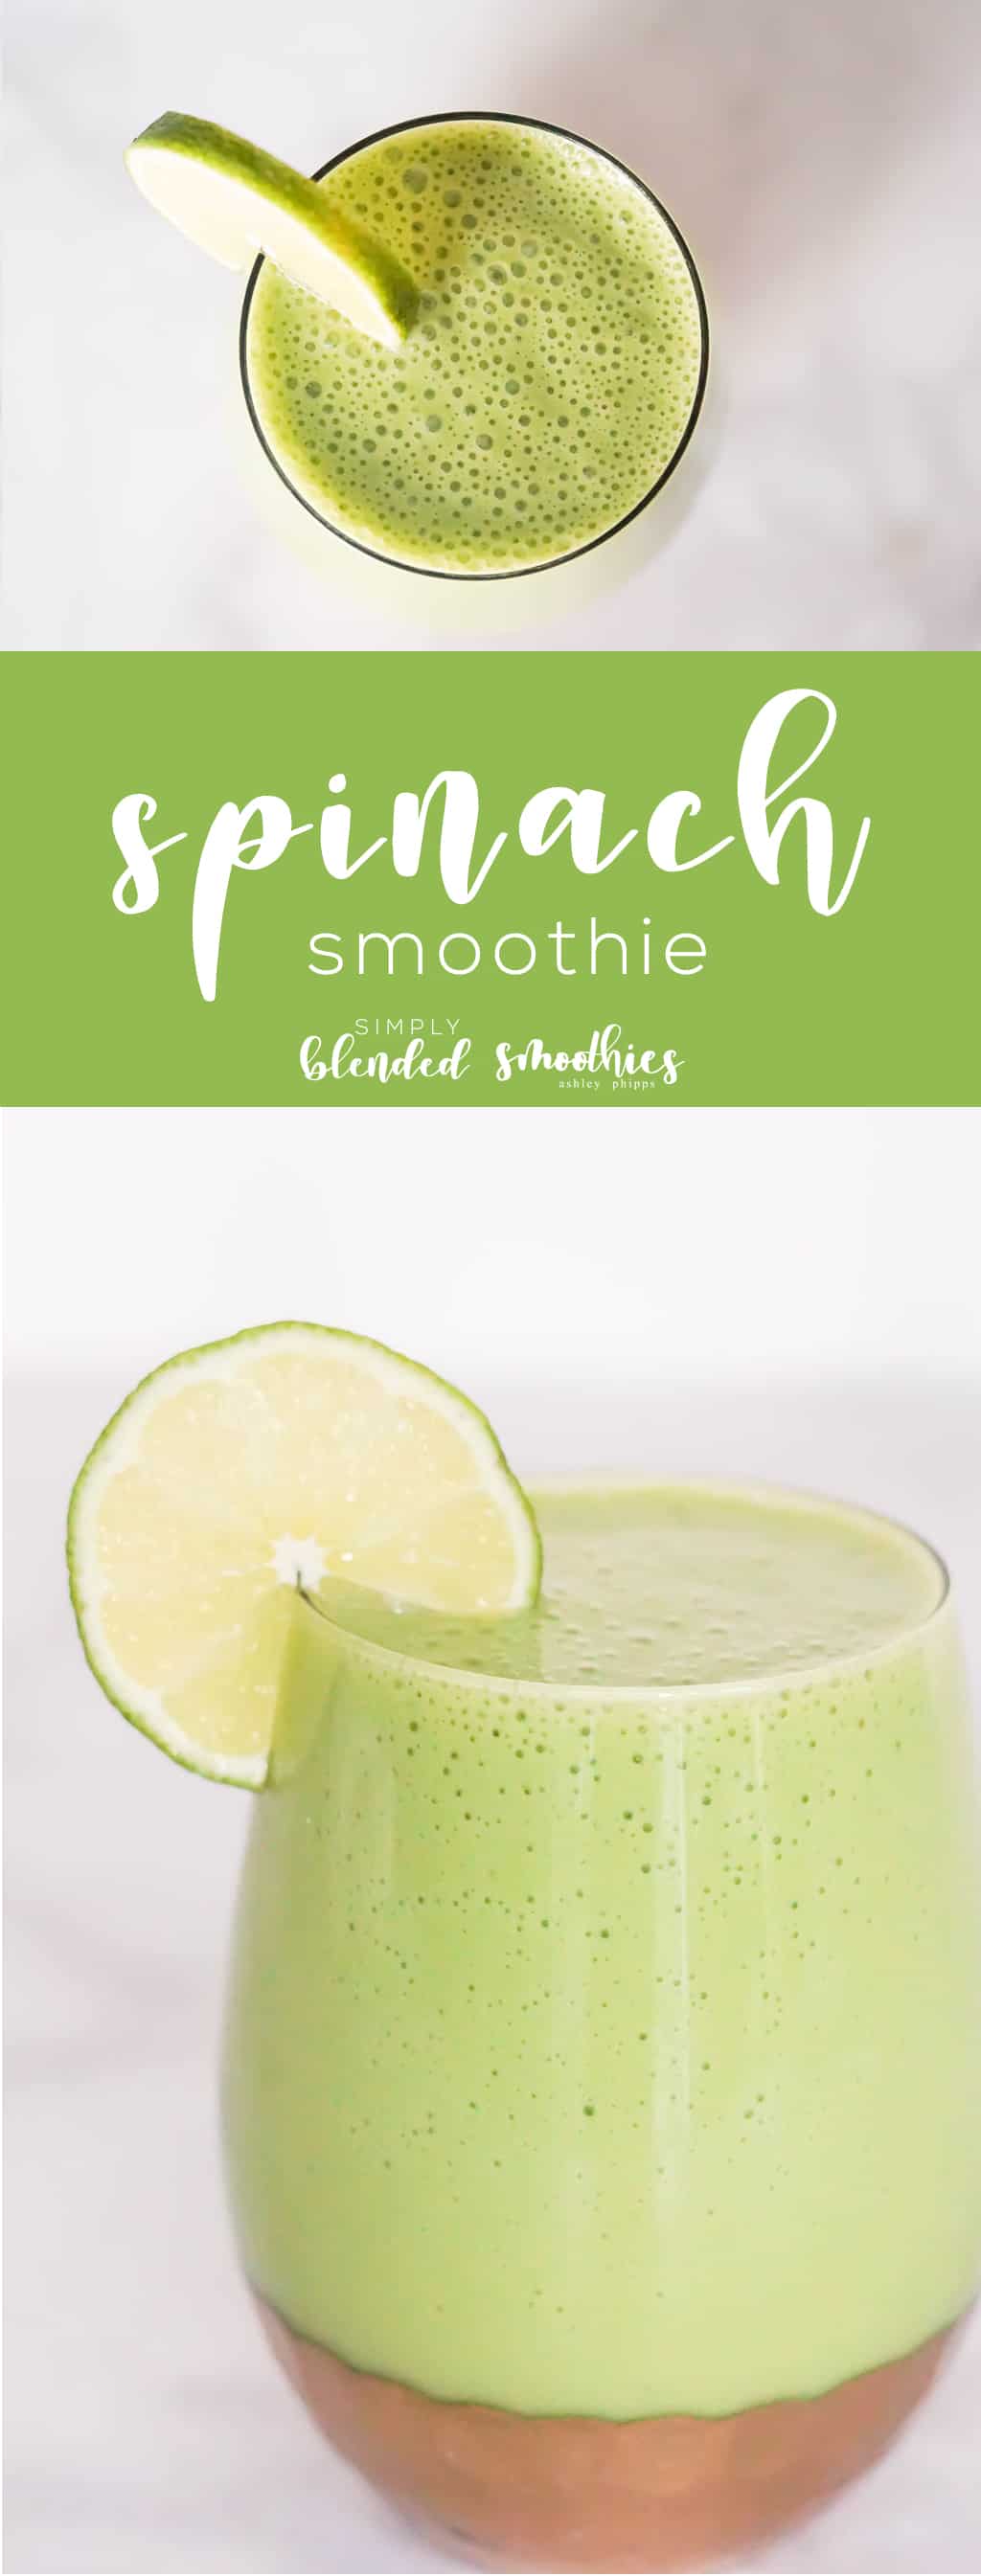 Easy Spinach Smoothie Recipe - A Delicious Spinach Smoothie Recipe That Does Not Taste Like Spinach - Spinach Smoothie That Tastes Delicious